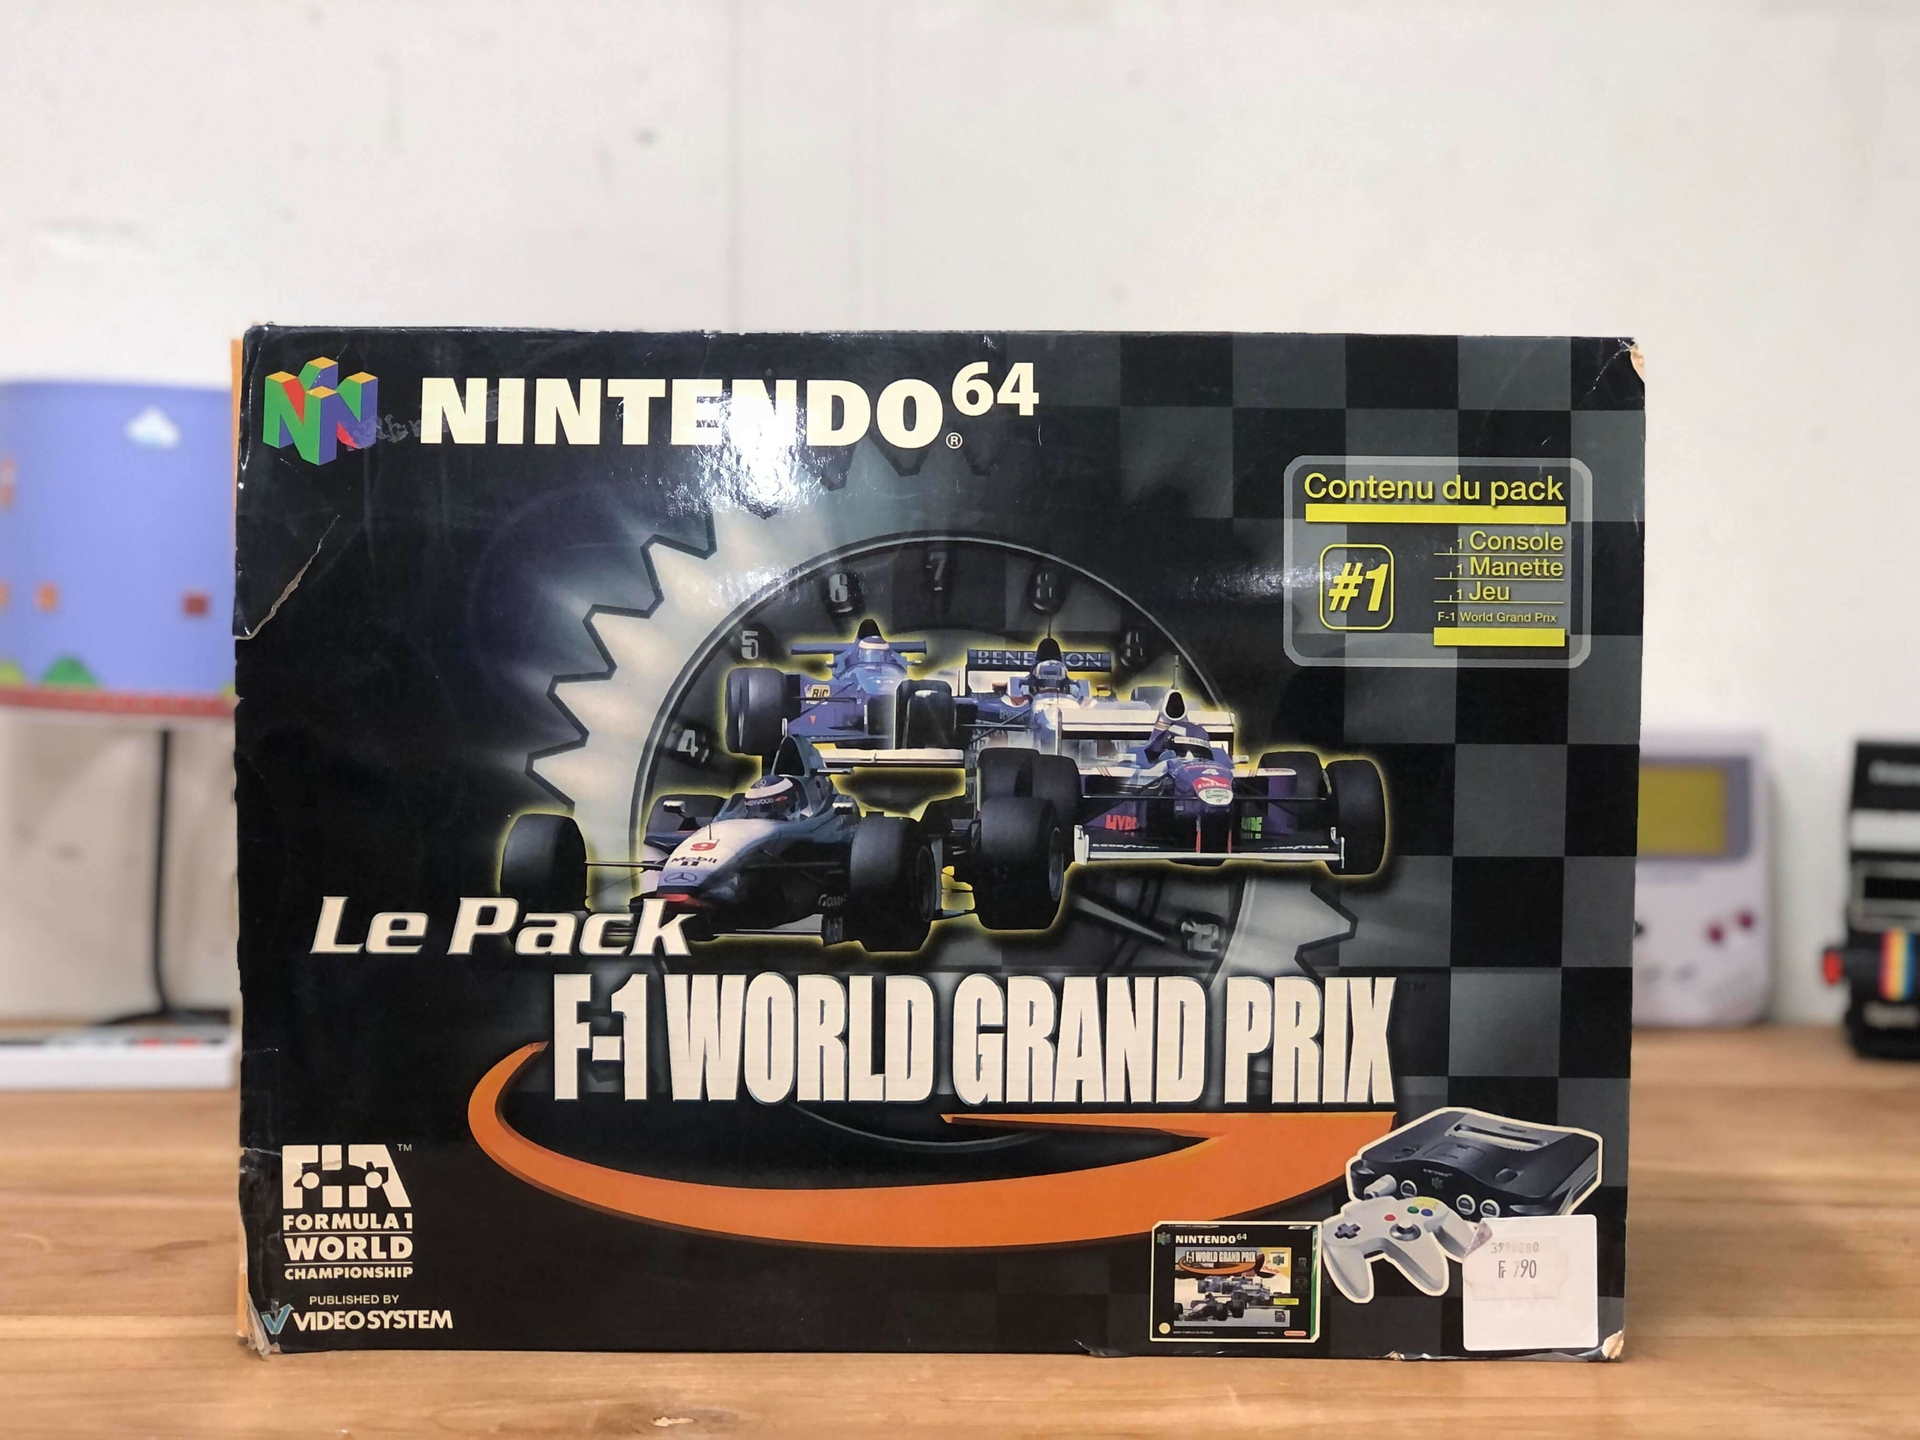 Nintendo 64 Starter Pack - F1 World Grand Prix Edition [Complete] Kopen | Nintendo 64 Hardware